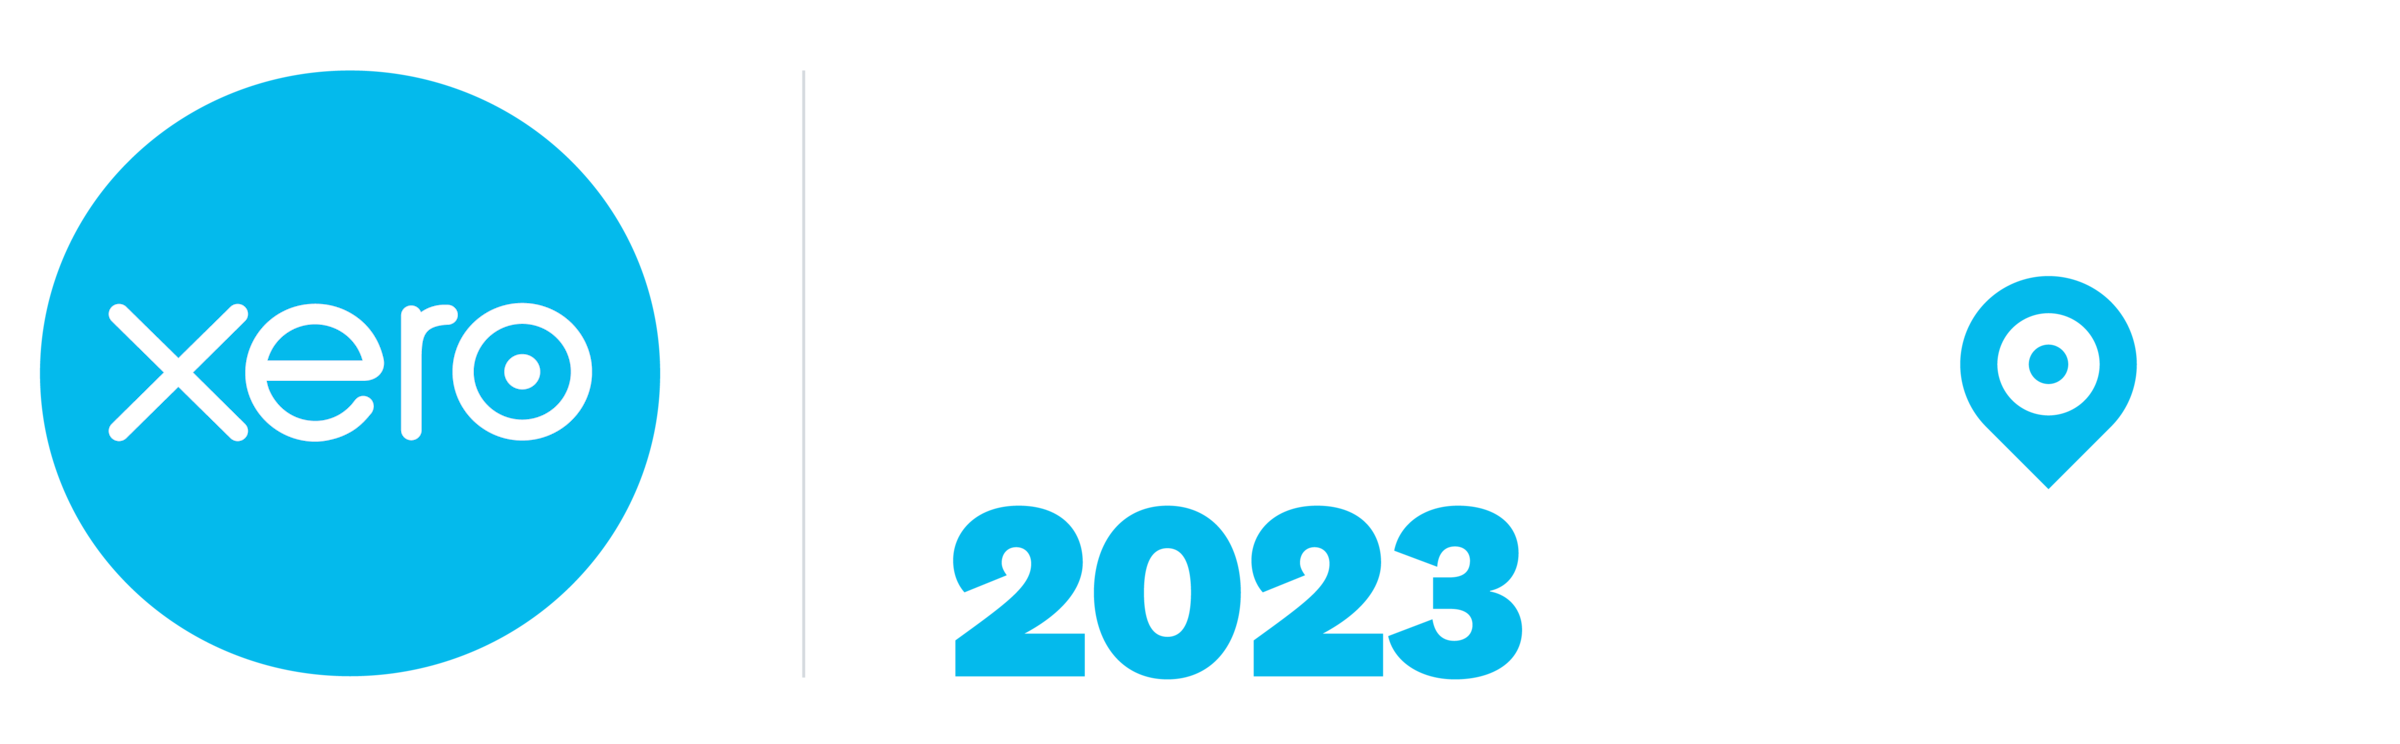 Asia Roadshow logo 2023